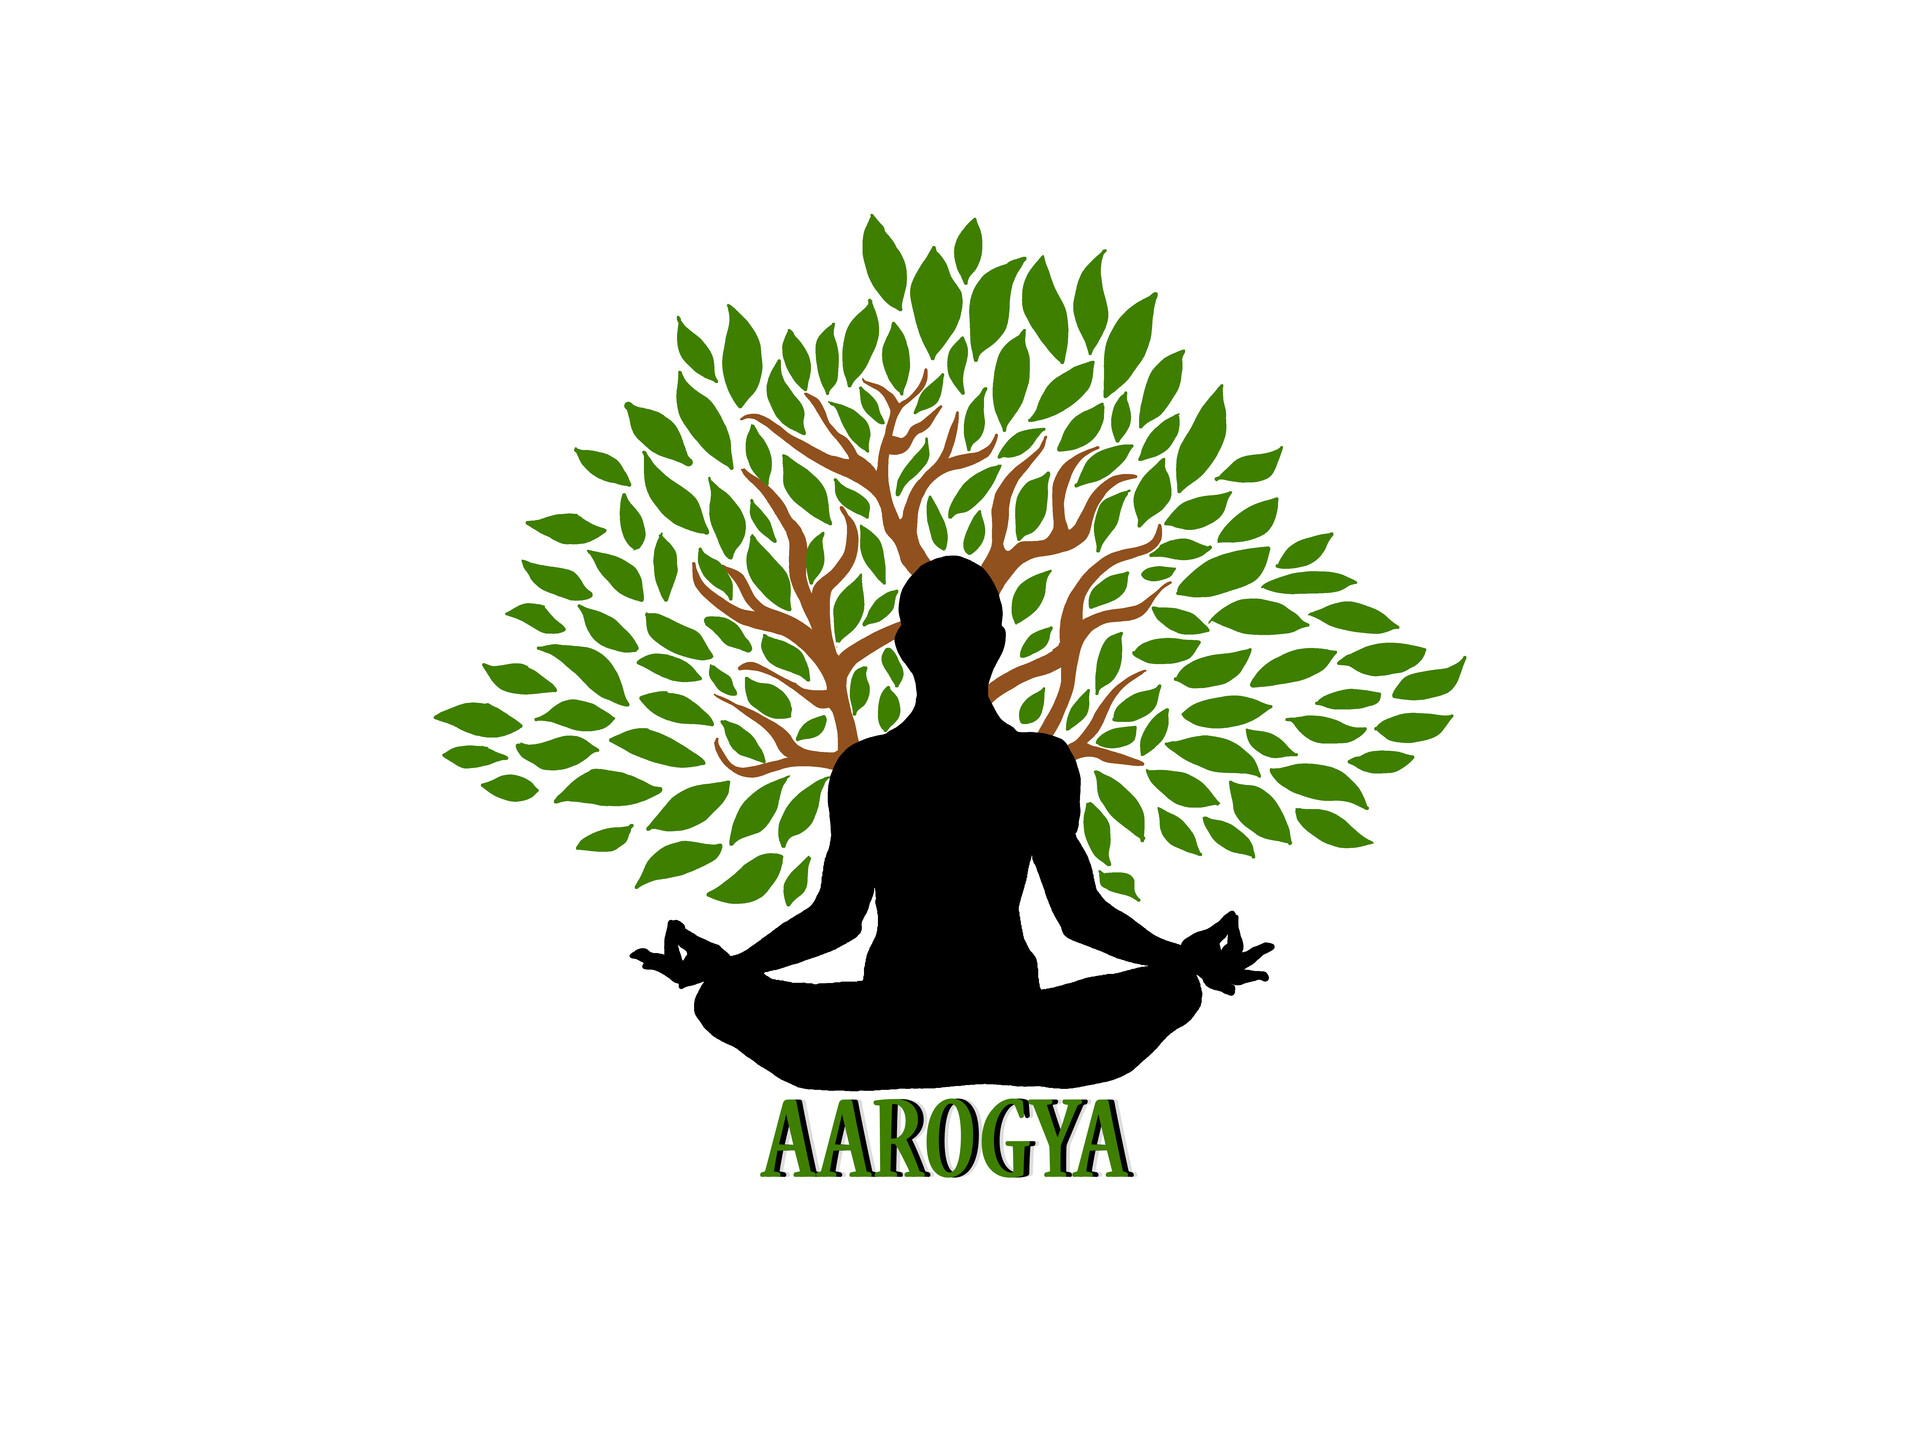 ArtStation - Logo Design - Aarogya